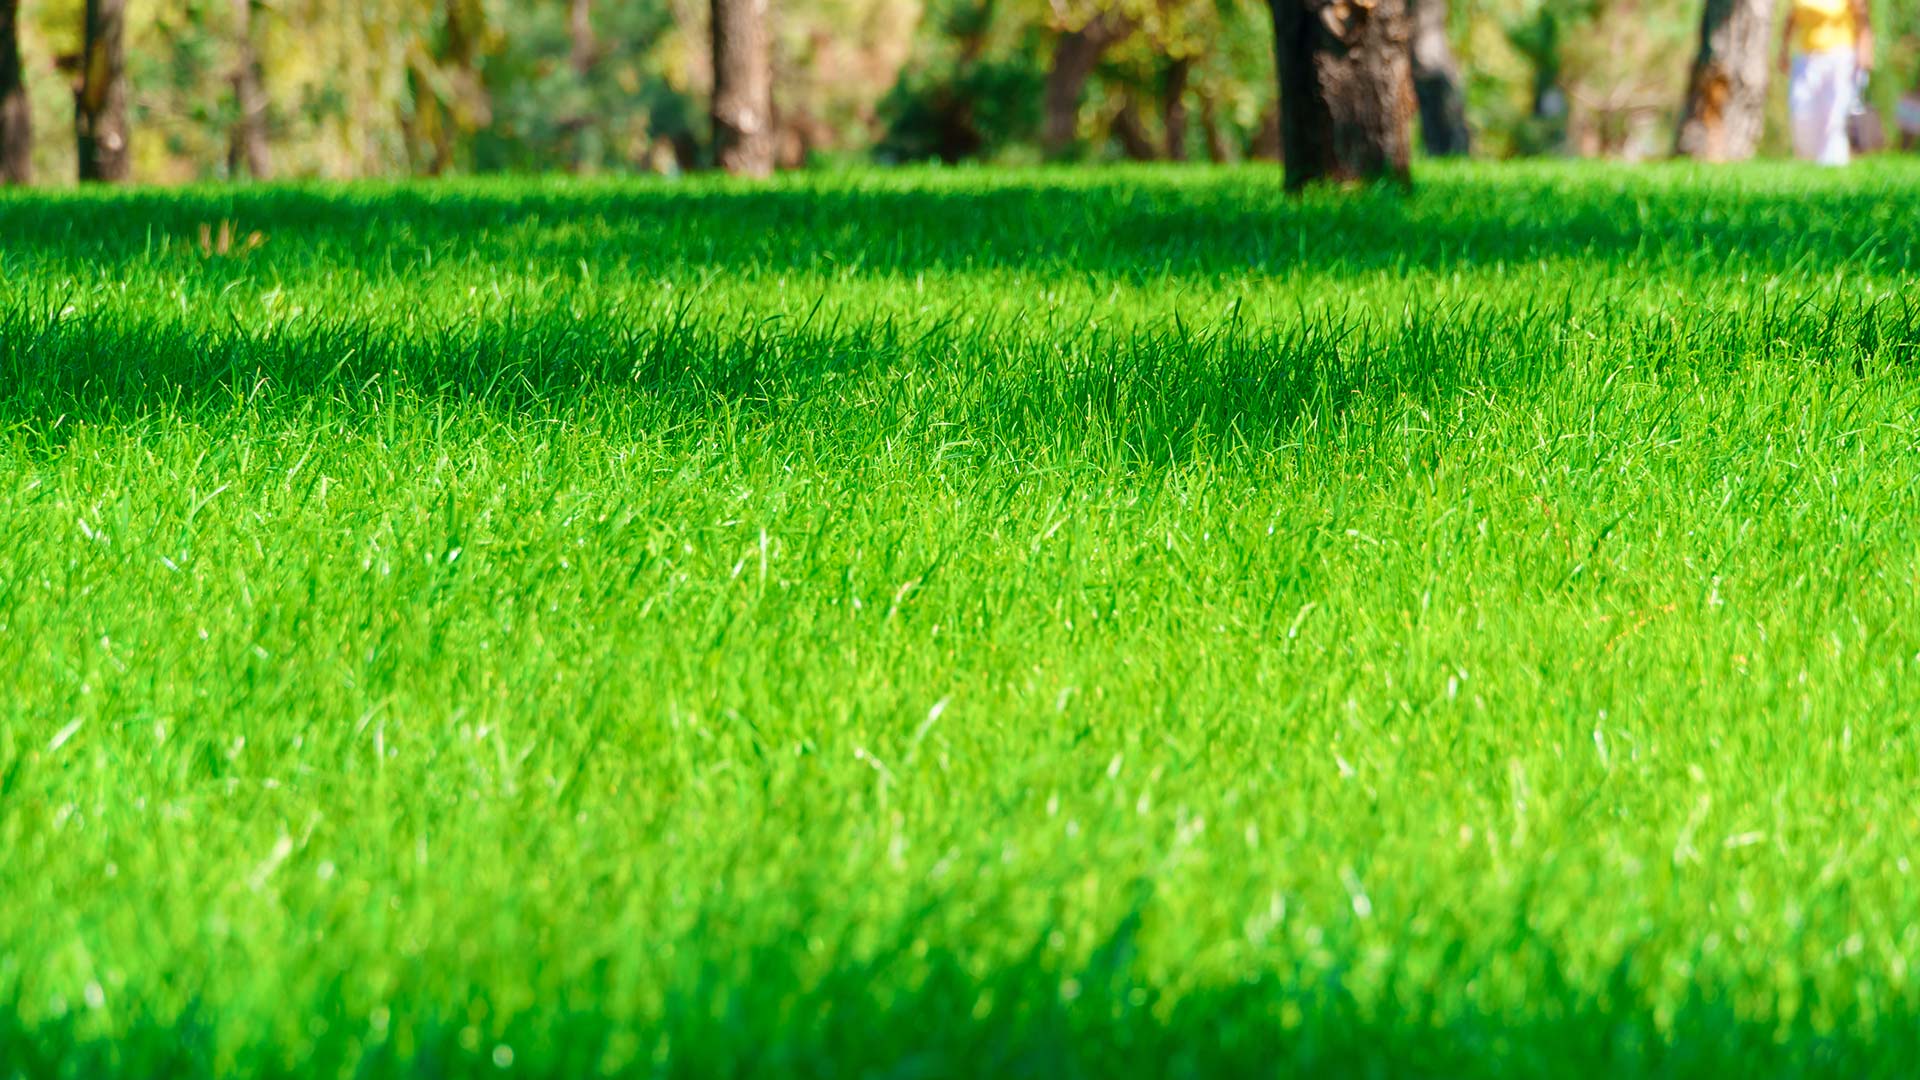 Lush, well-fertilized home lawn grass near Ankeny, IA.